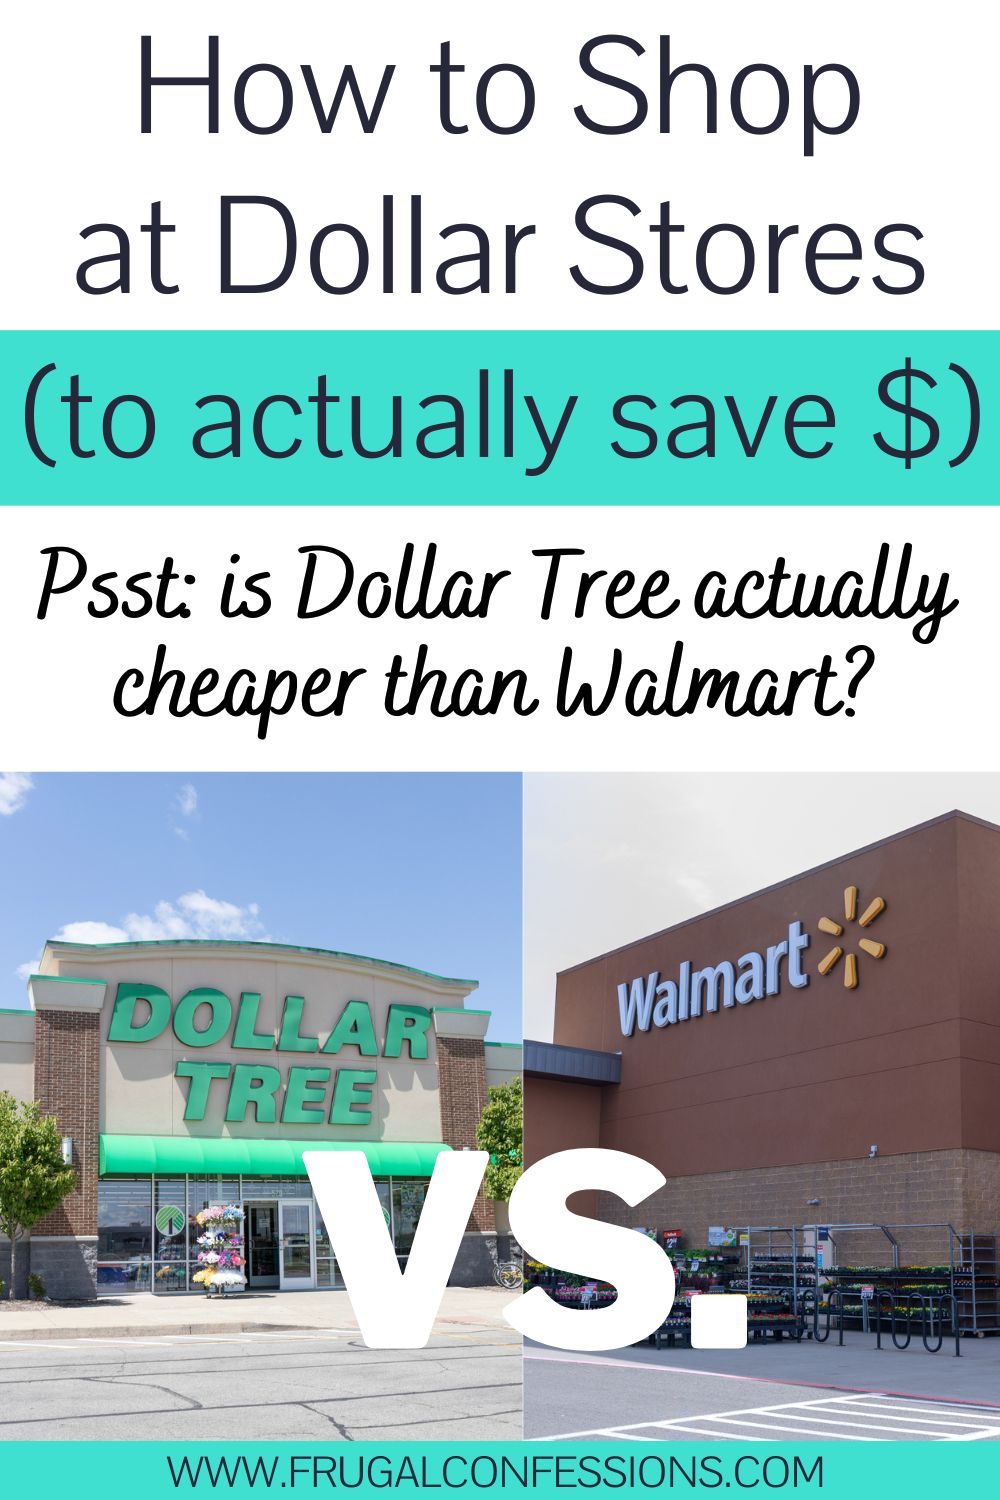 dollar tree store photo vs. walmart photo, text overlay 